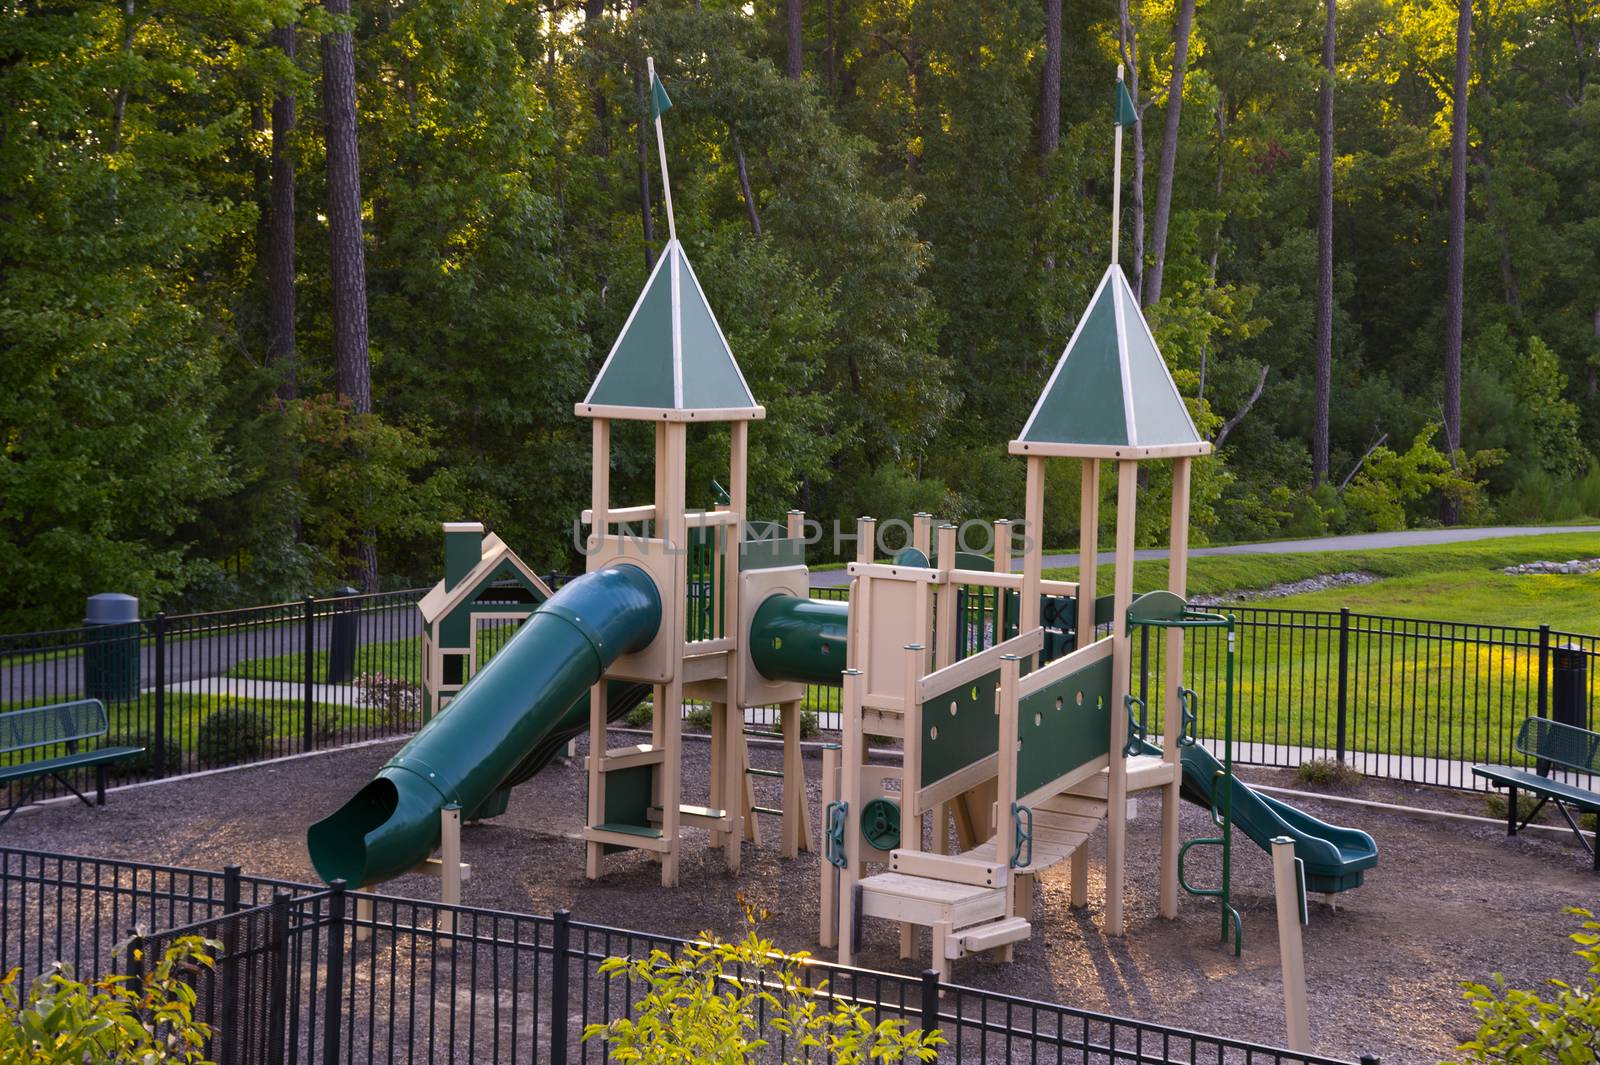 Children outdoor plastic playground in the park